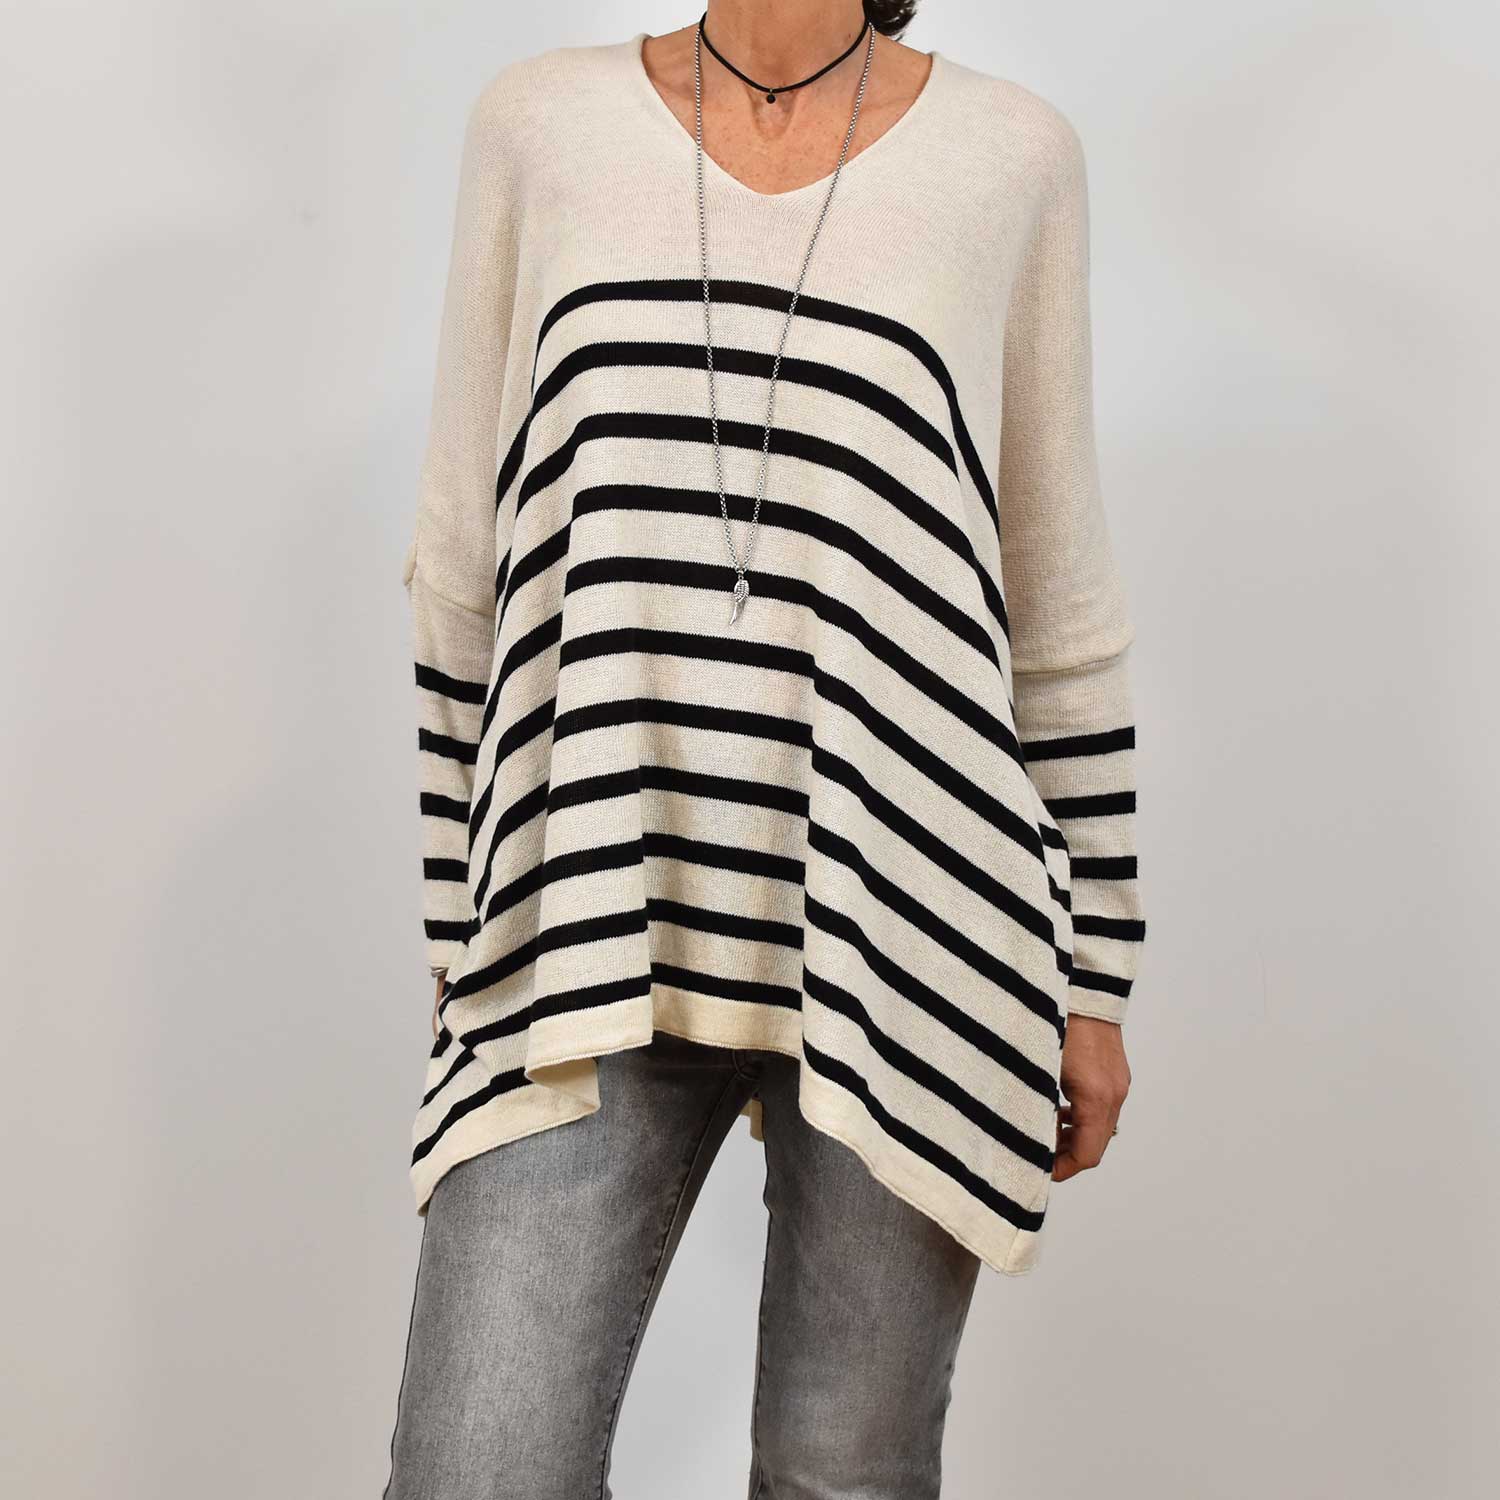 Striped oversize sweater